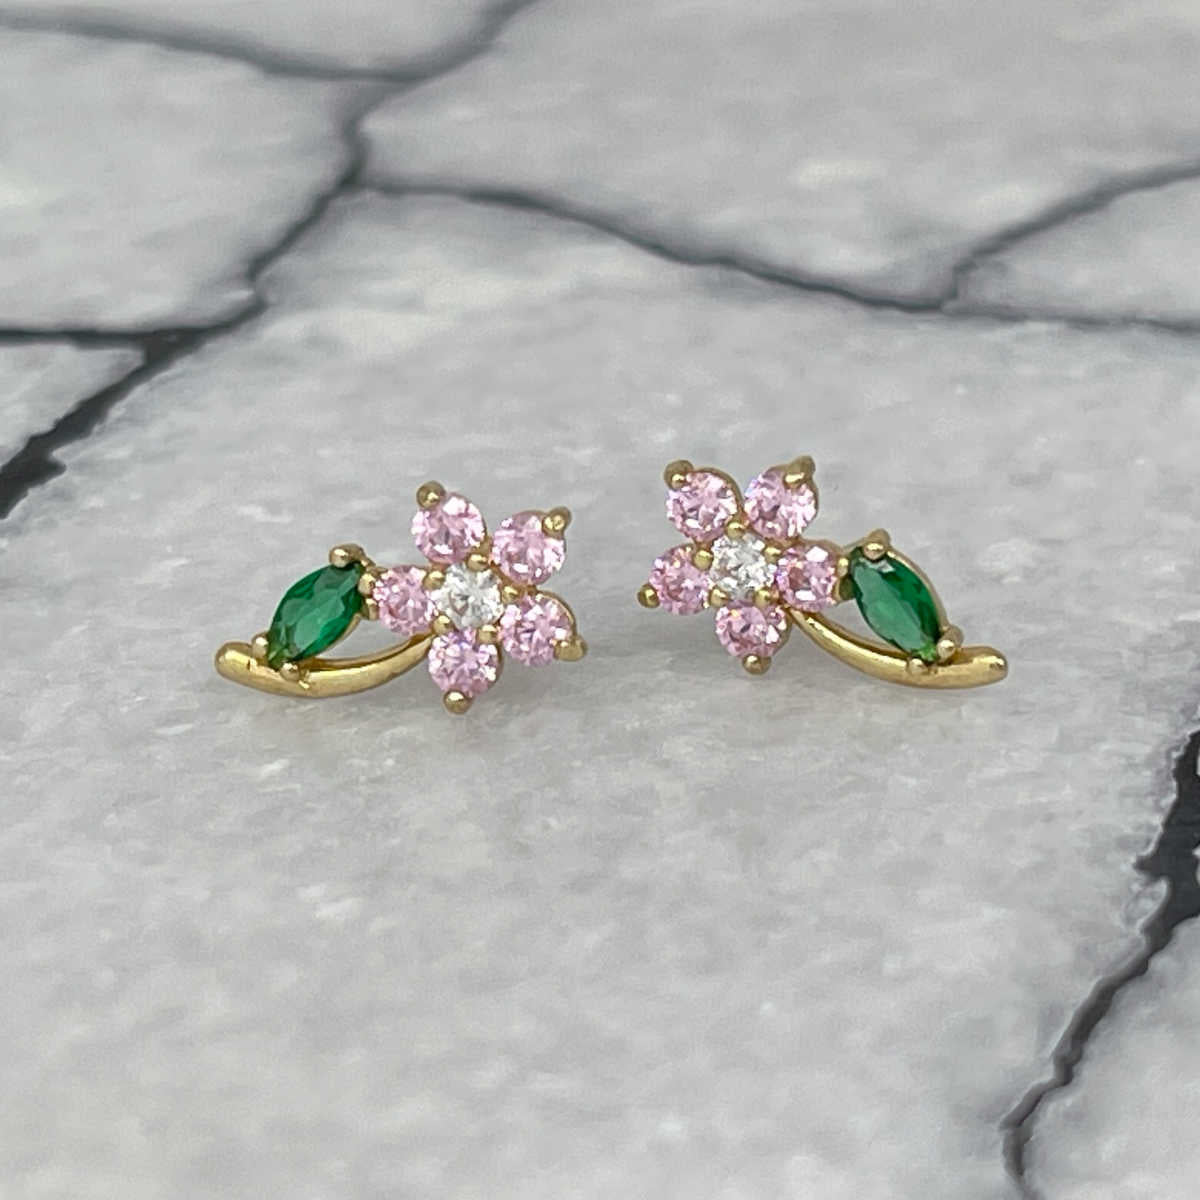 Pink Flower Earrings, 14K Gold & Gemstone Studs, Two of Most Fine Jewelry